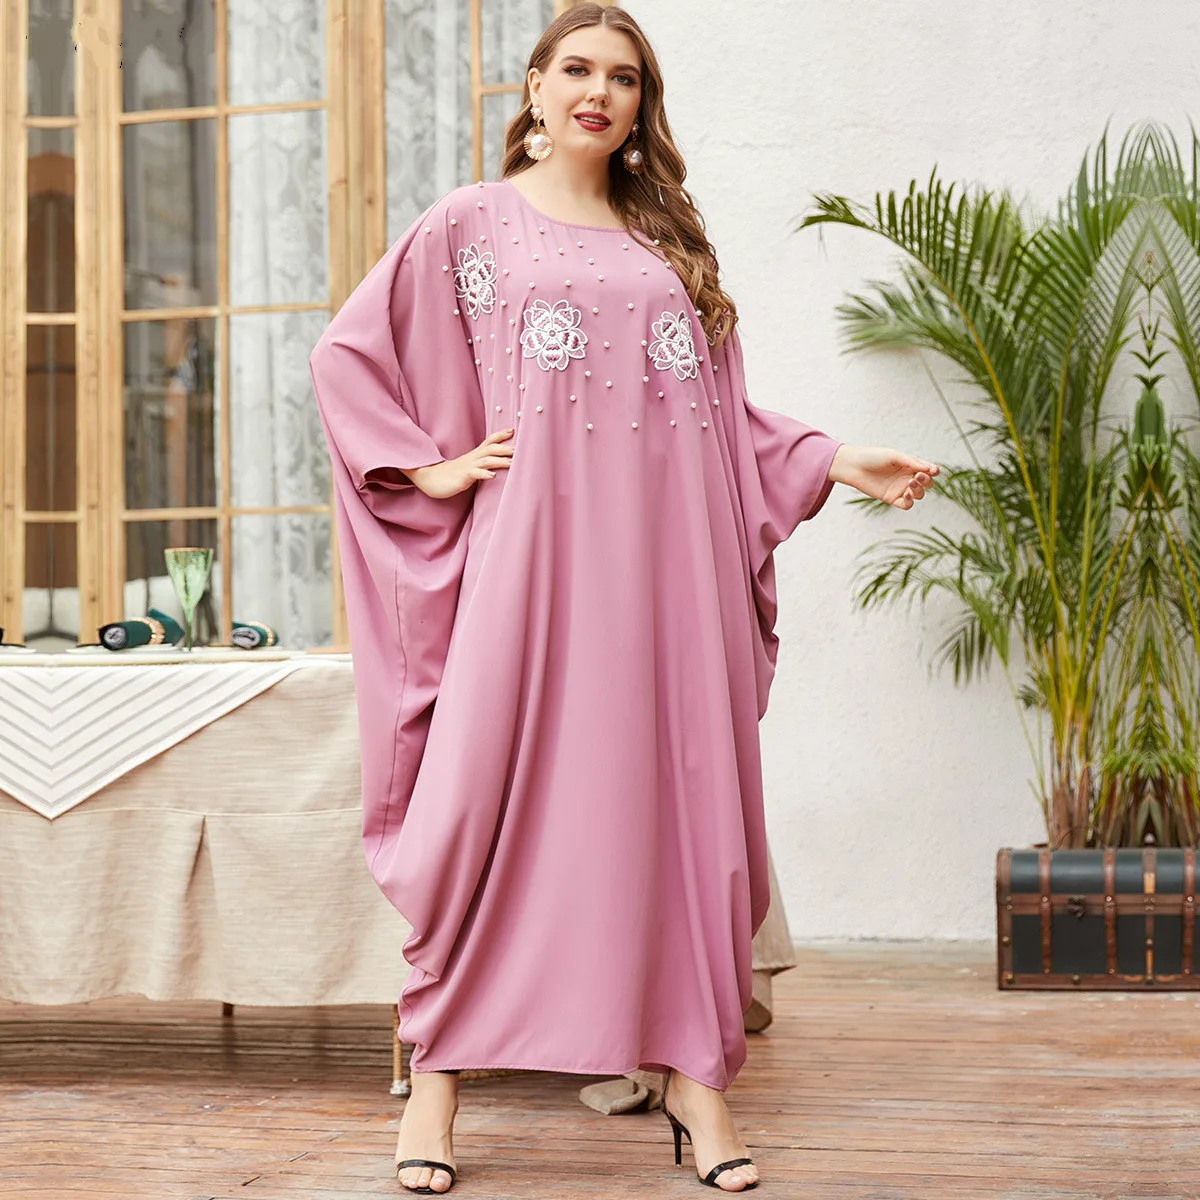 

Large Size Loose Pink Bead Embroidery Bat Sleeve Robe Women's Dress Dubai Muslim Eid Al-fitr Ramadan Worship Service Clothing